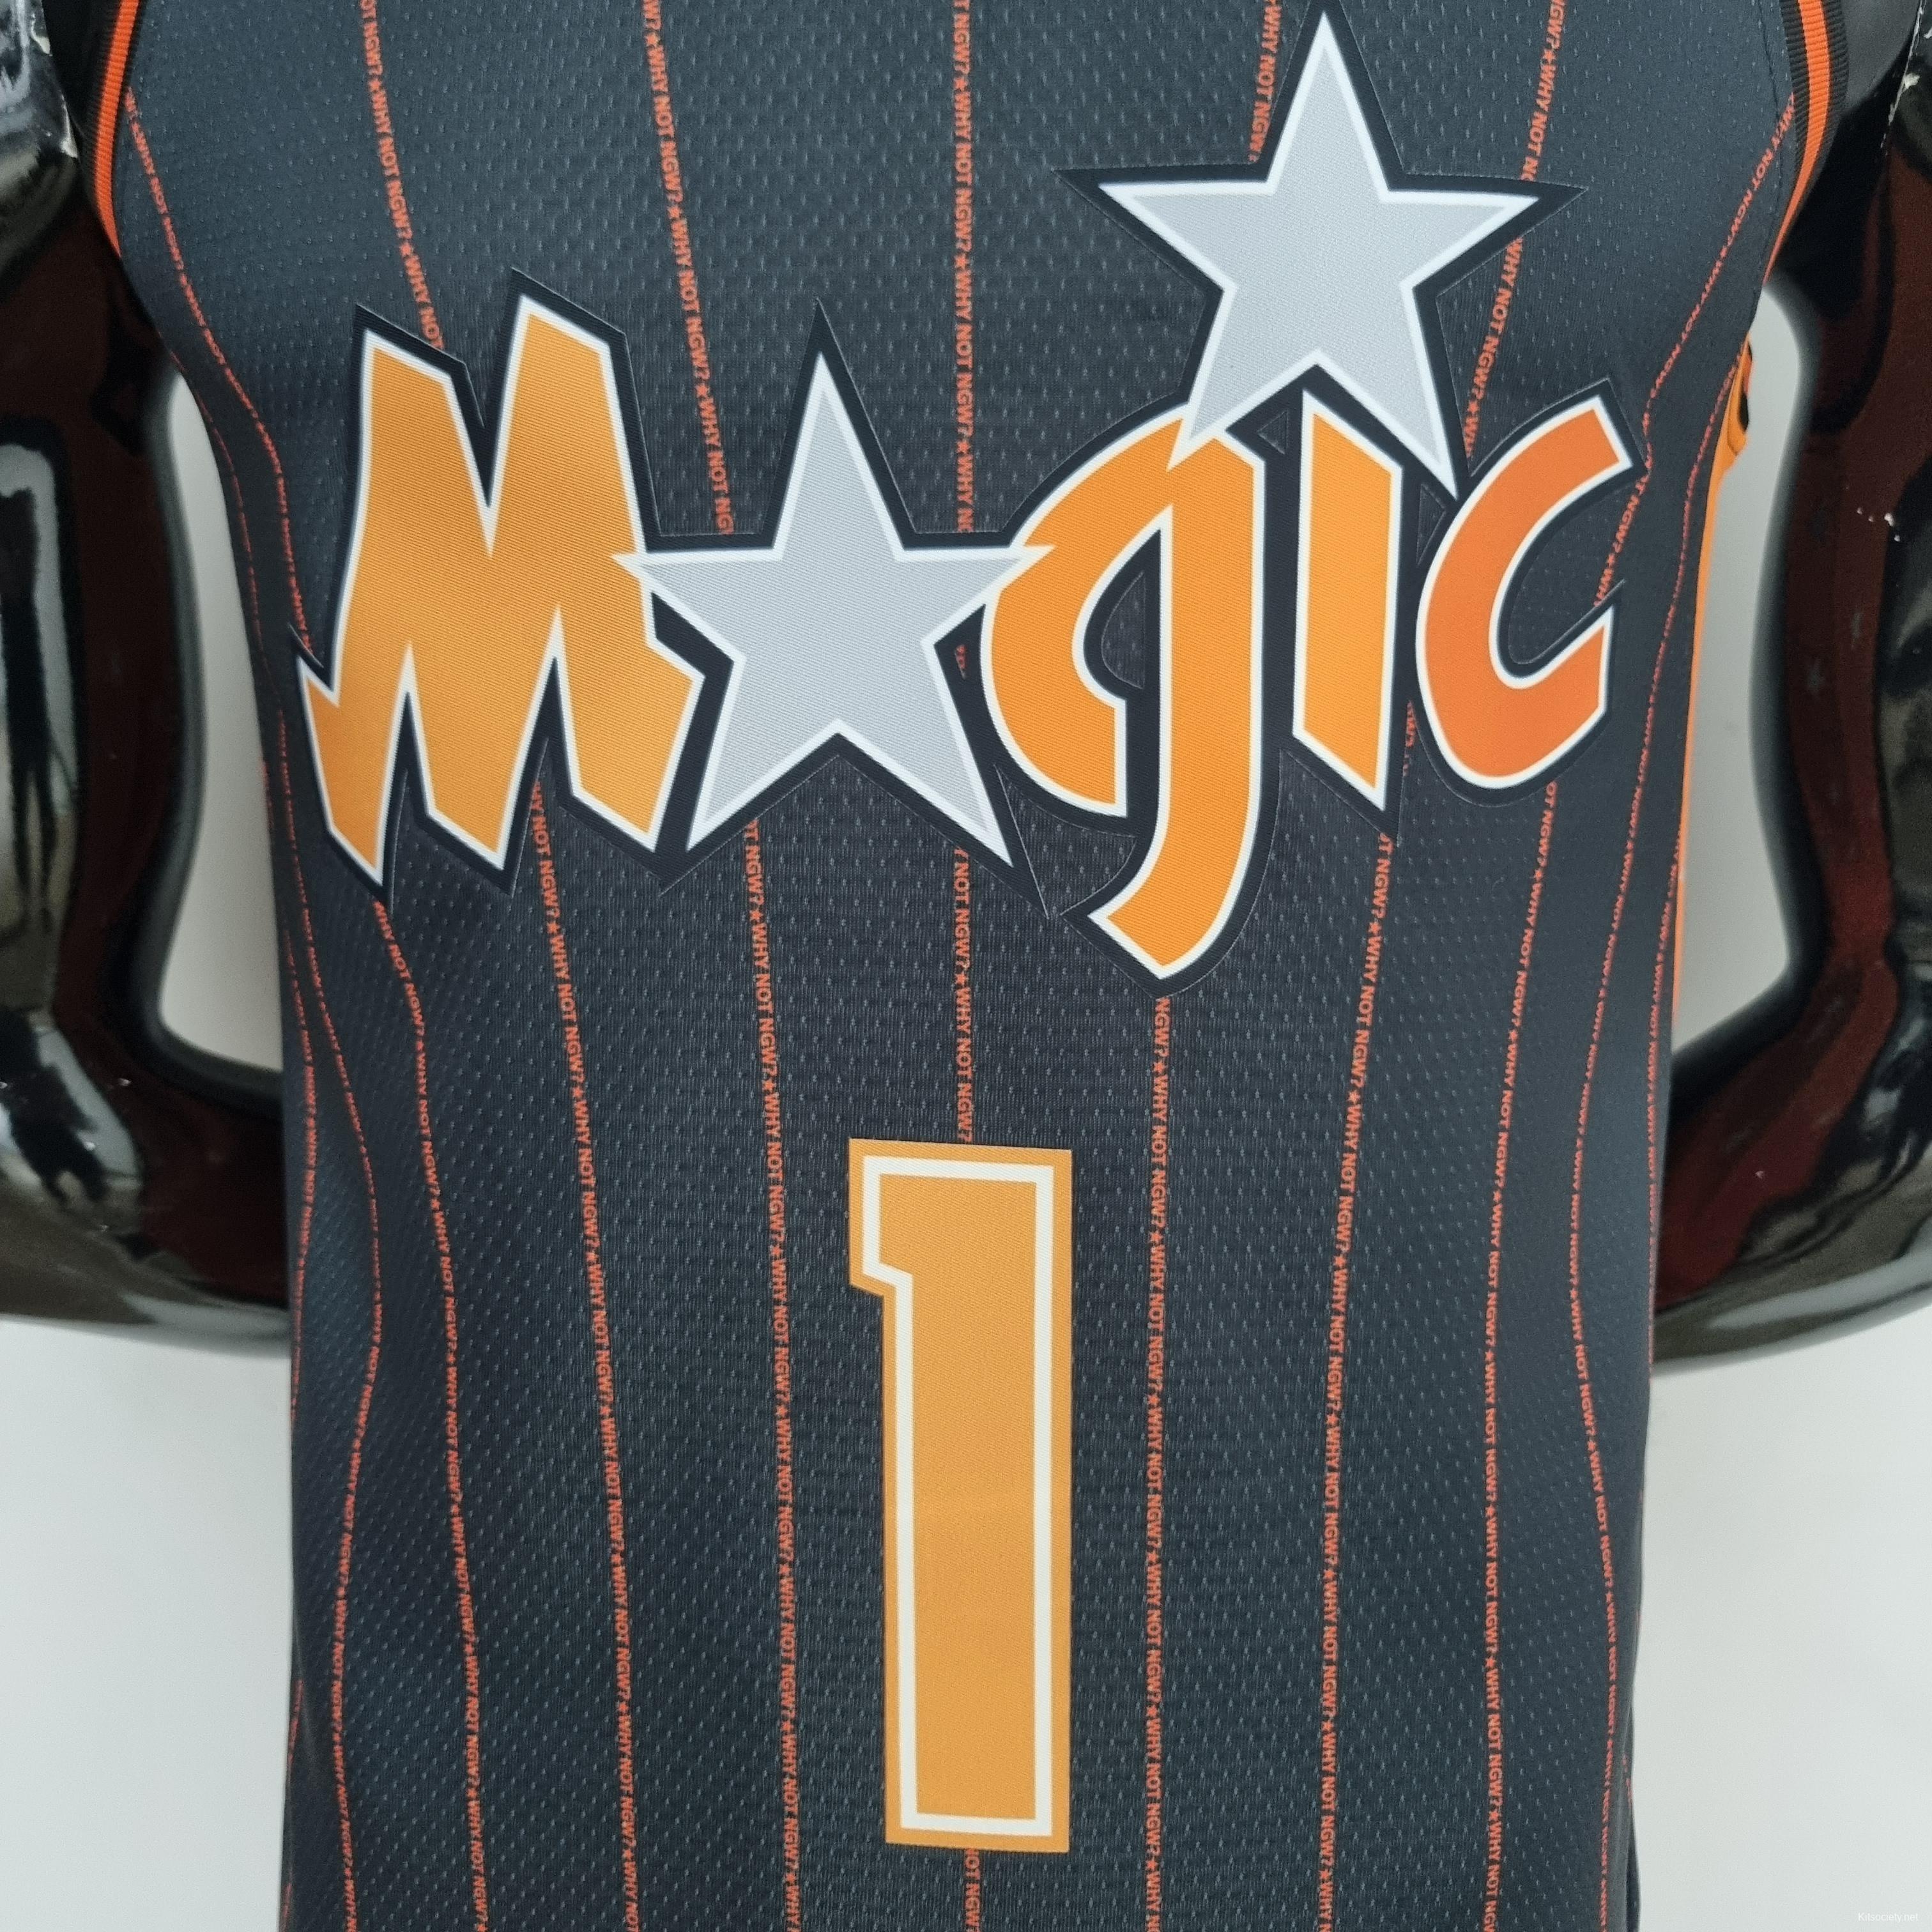 magic city edition jersey